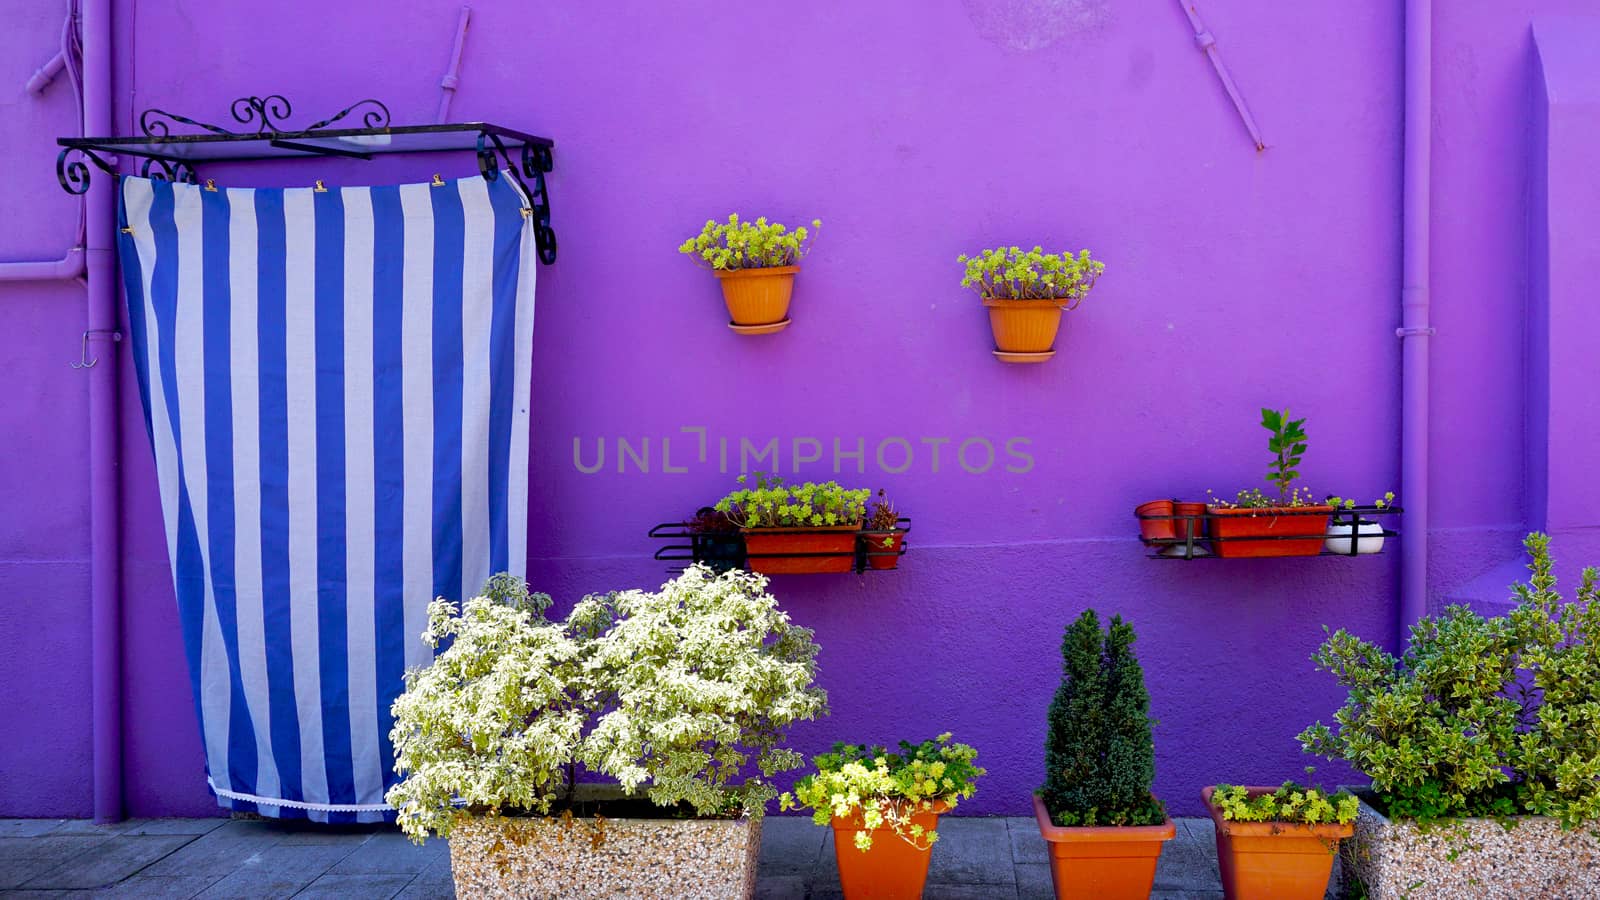 Burano purple wall color house architecture, Venice, Italy